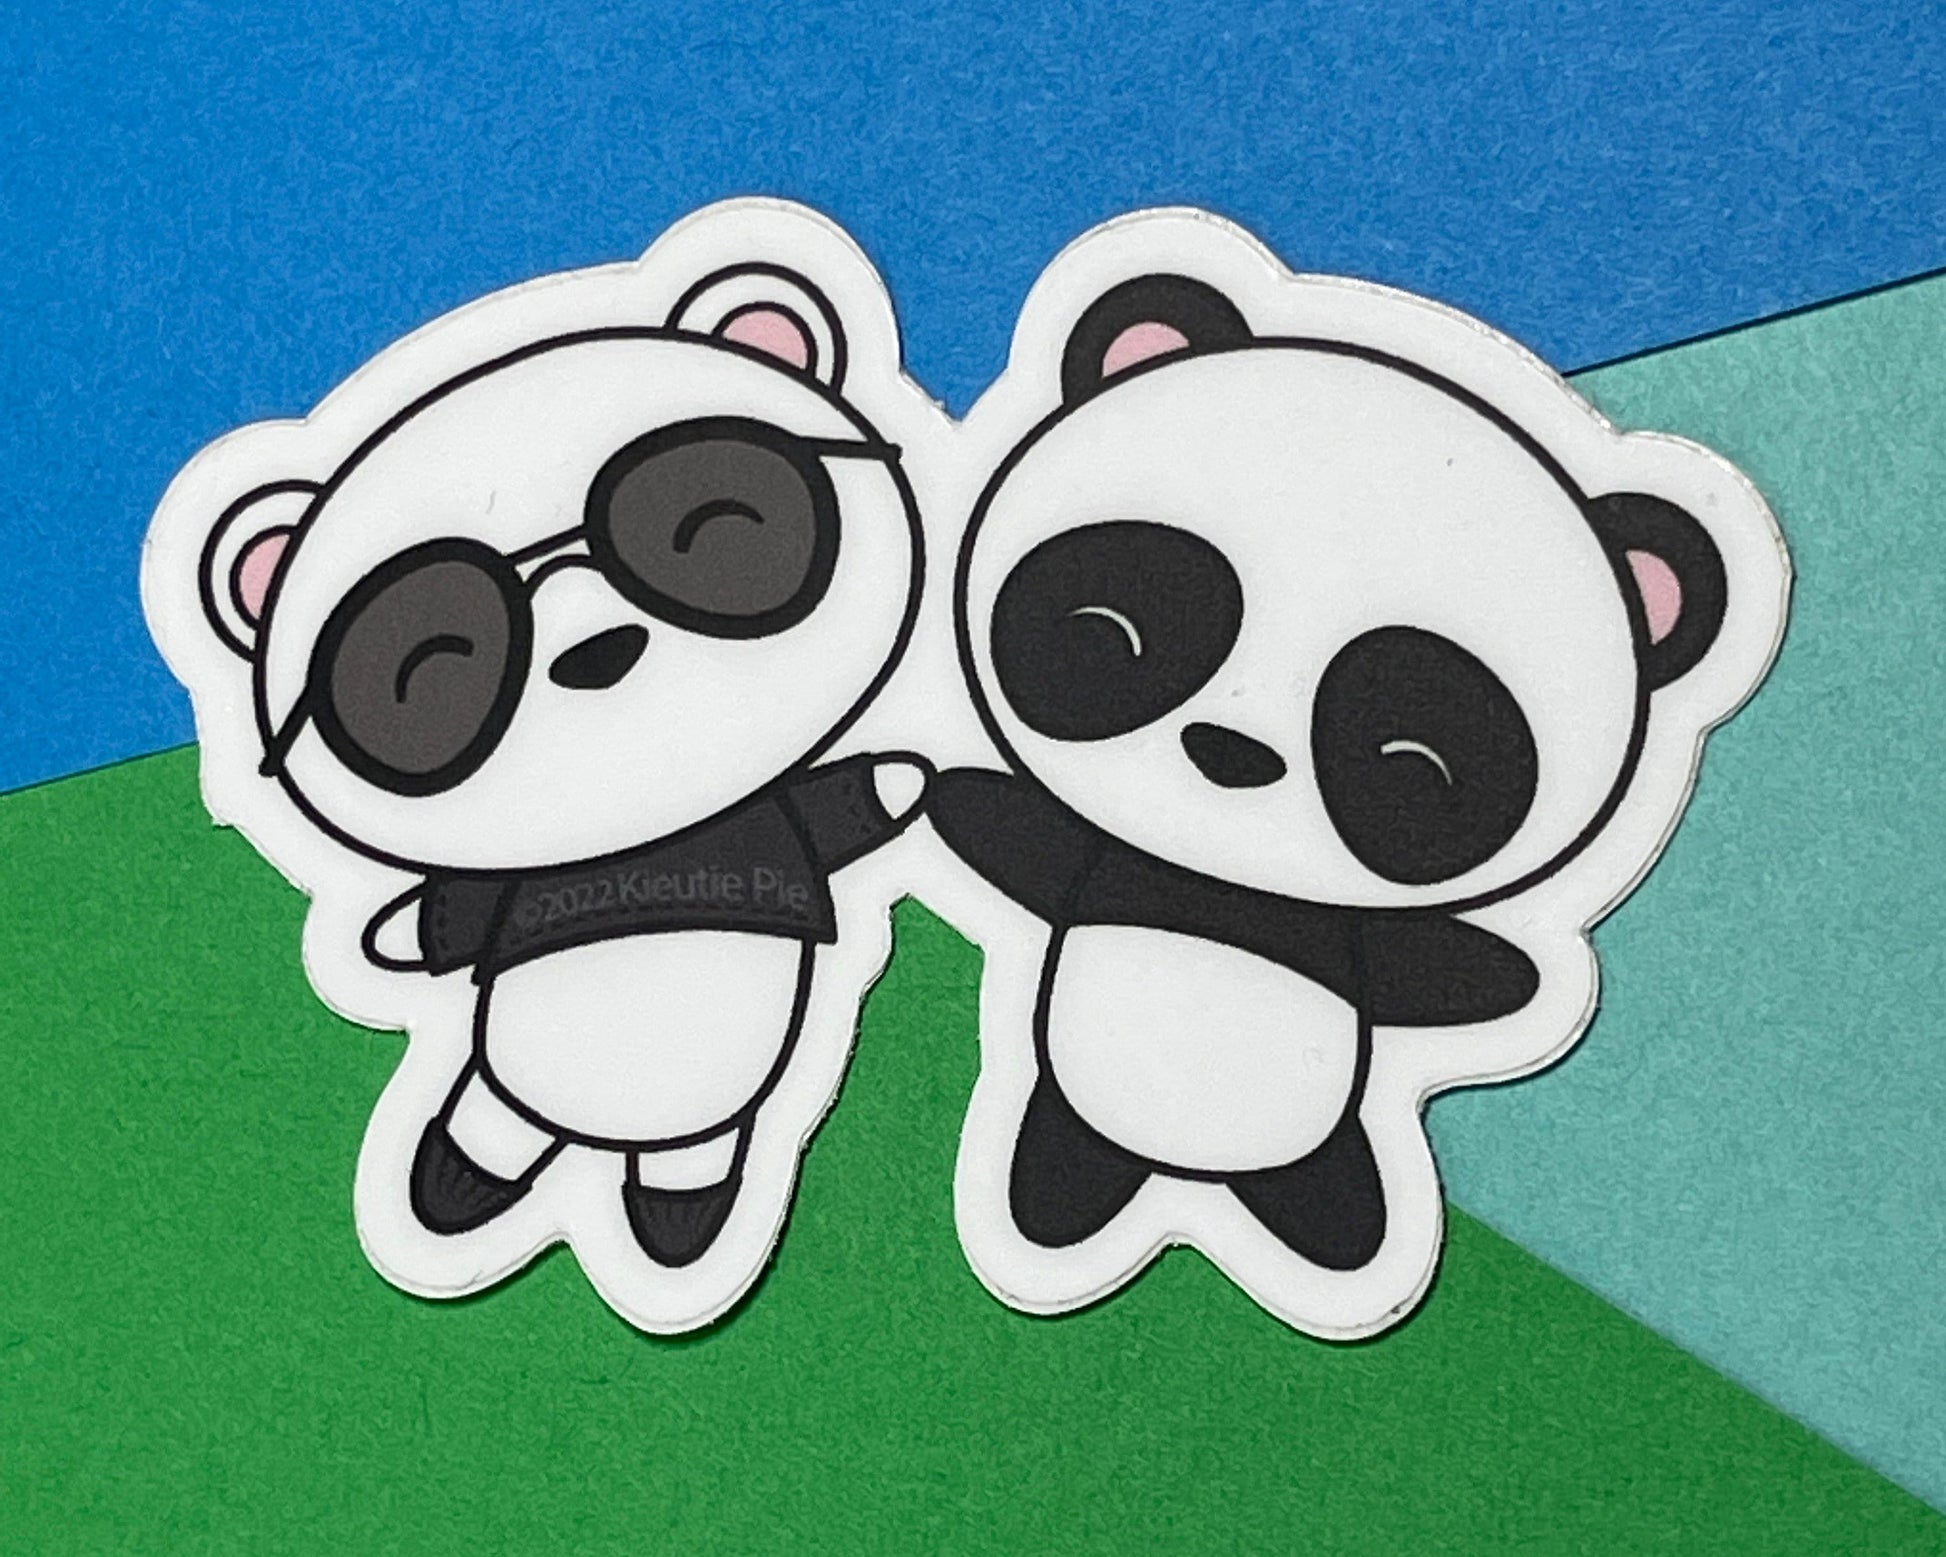 Pandas (Imposter Syndrome ) Durable Weatherproof Die Cut Matte Vinyl Sticker - car, water bottle, laptop